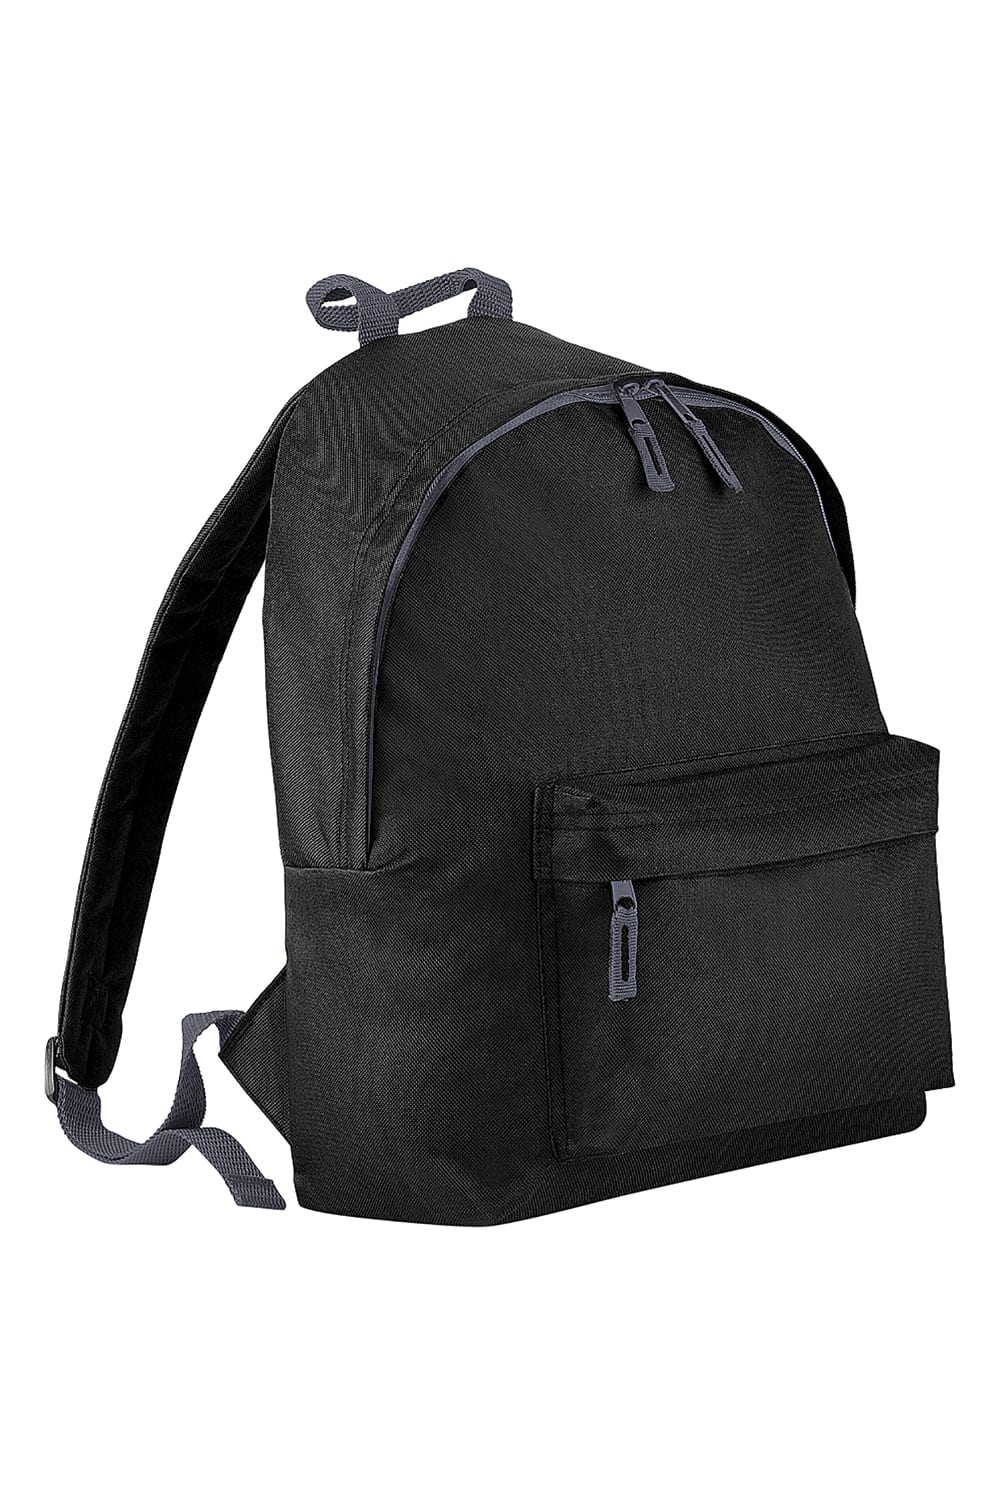 Junior Fashion Backpack / Rucksack (14 Liters) (Pack of 2) (Black)